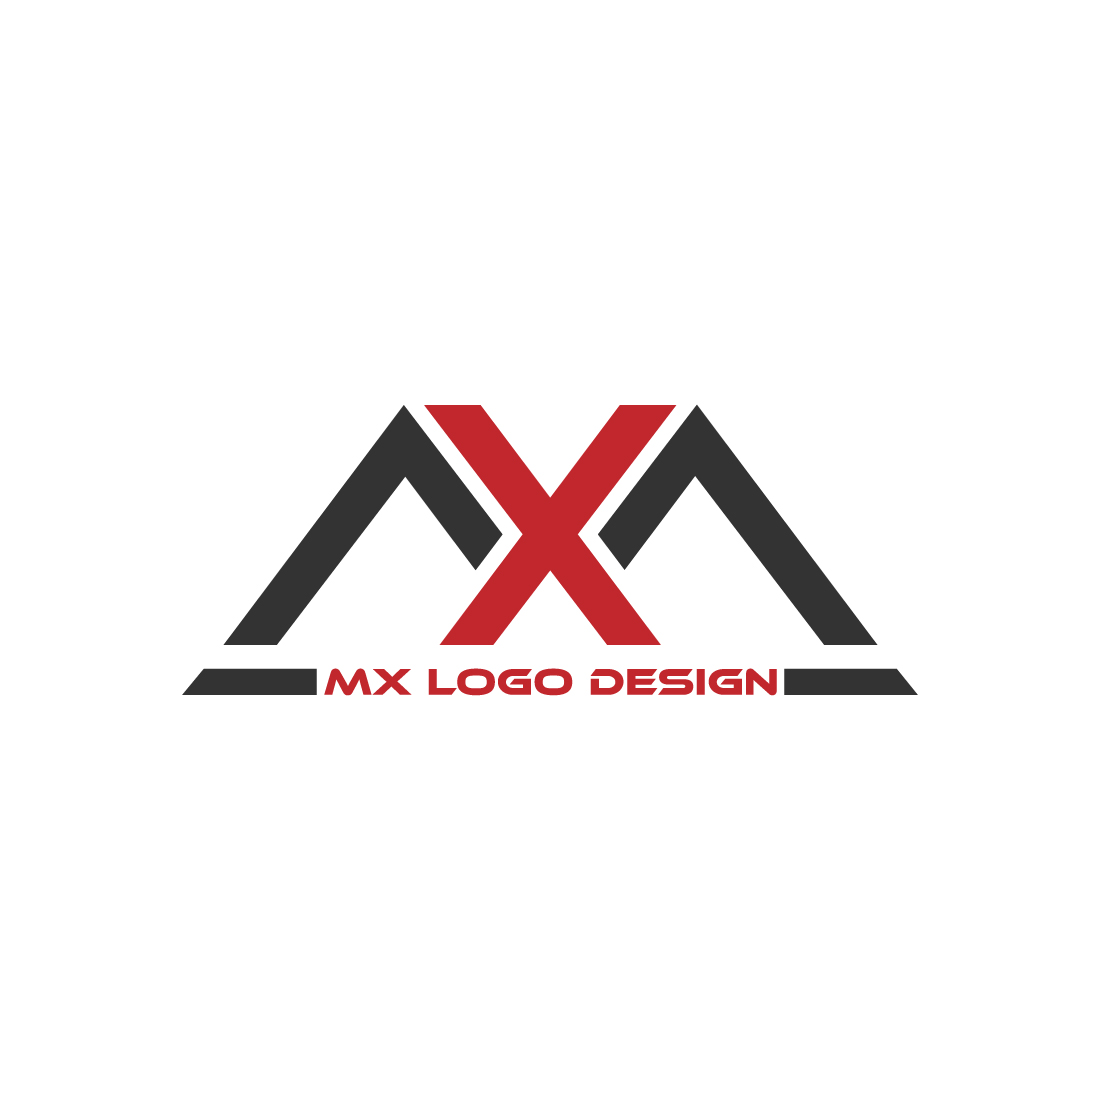 MX logo design preview image.